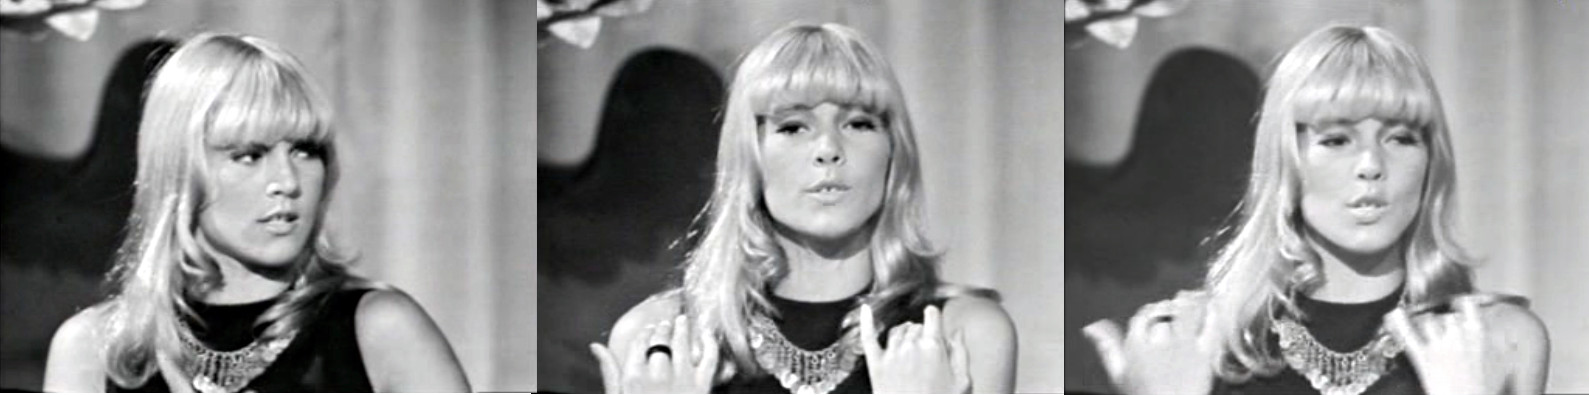 Sylvie Vartan dans l'émission "Sacha Show" du 9 octobre 1968